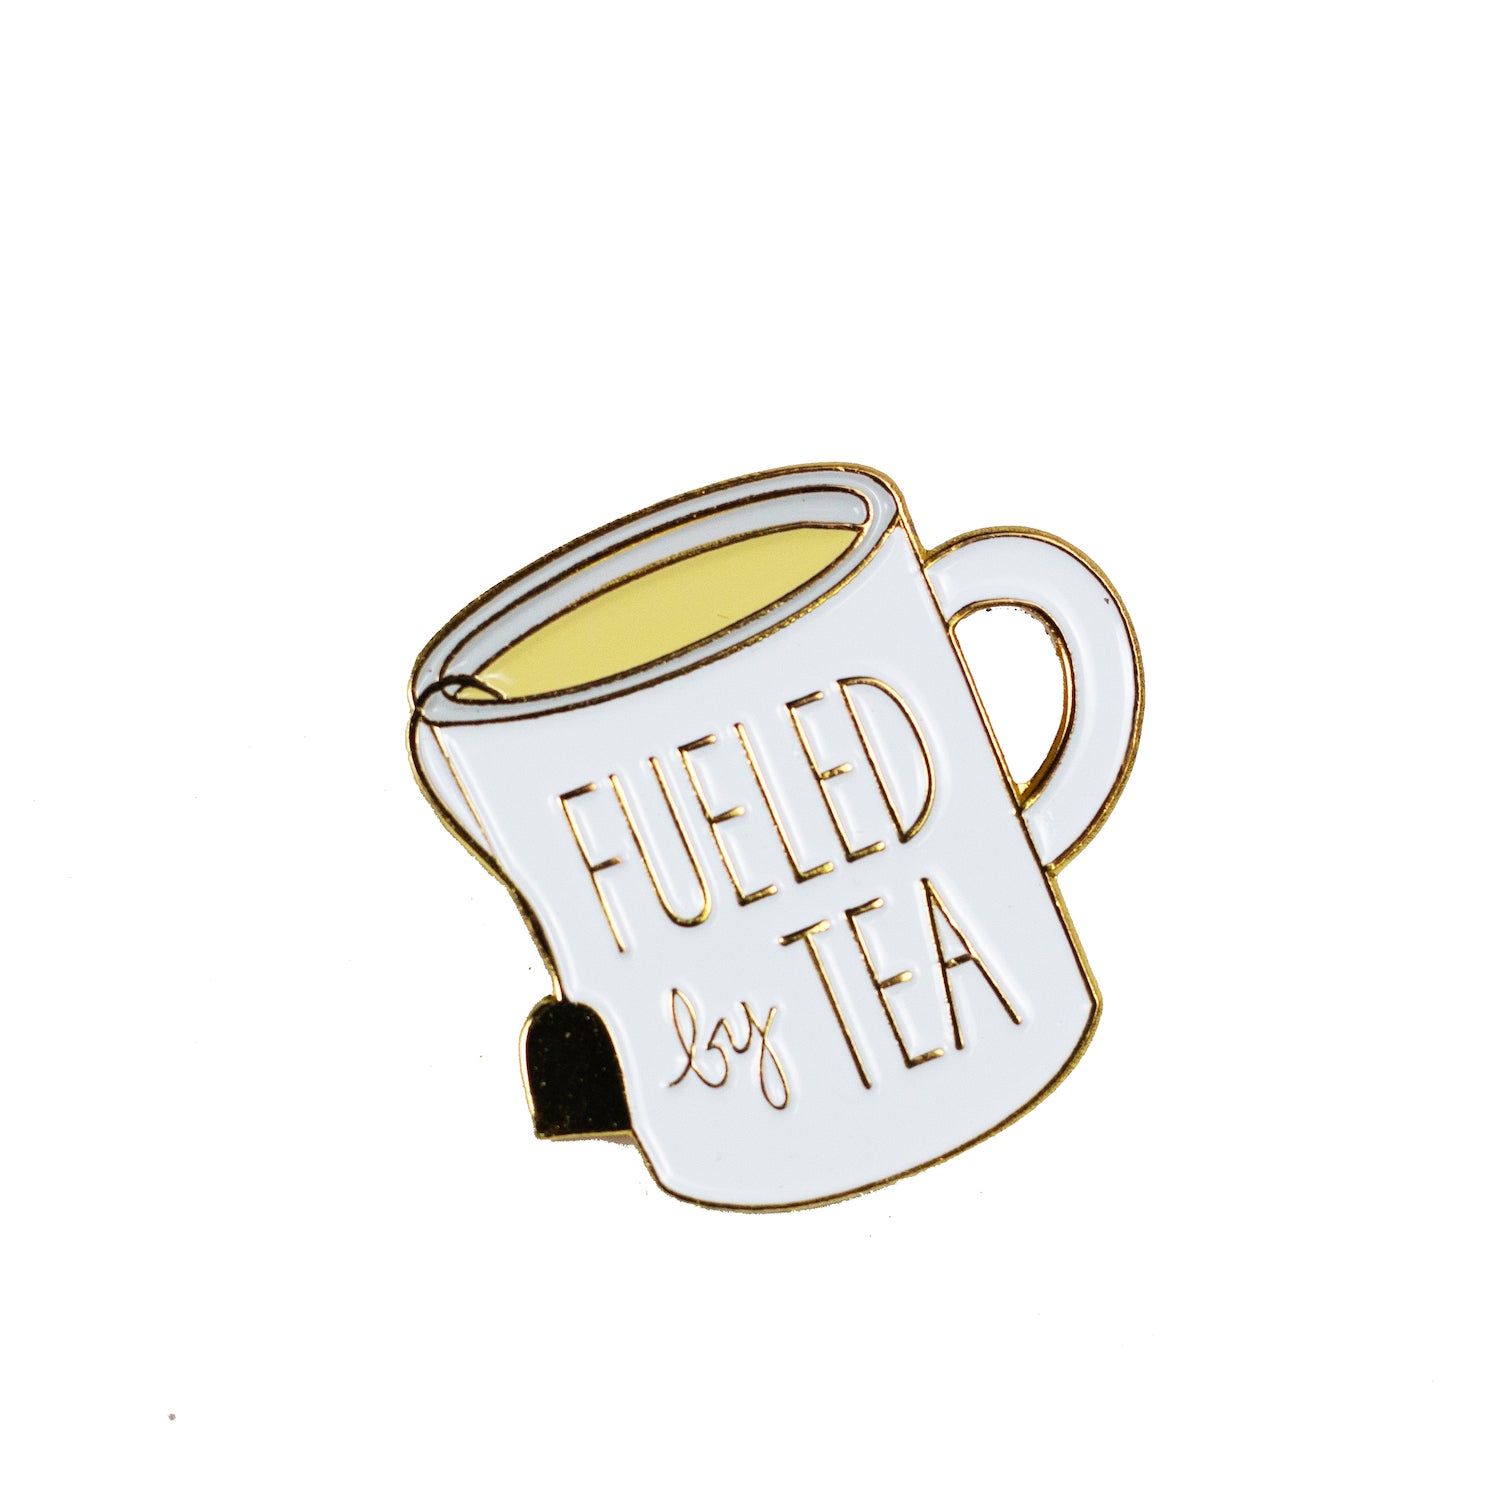 "Fueled By Tea" Enamel Pin - Full Leaf Tea Company